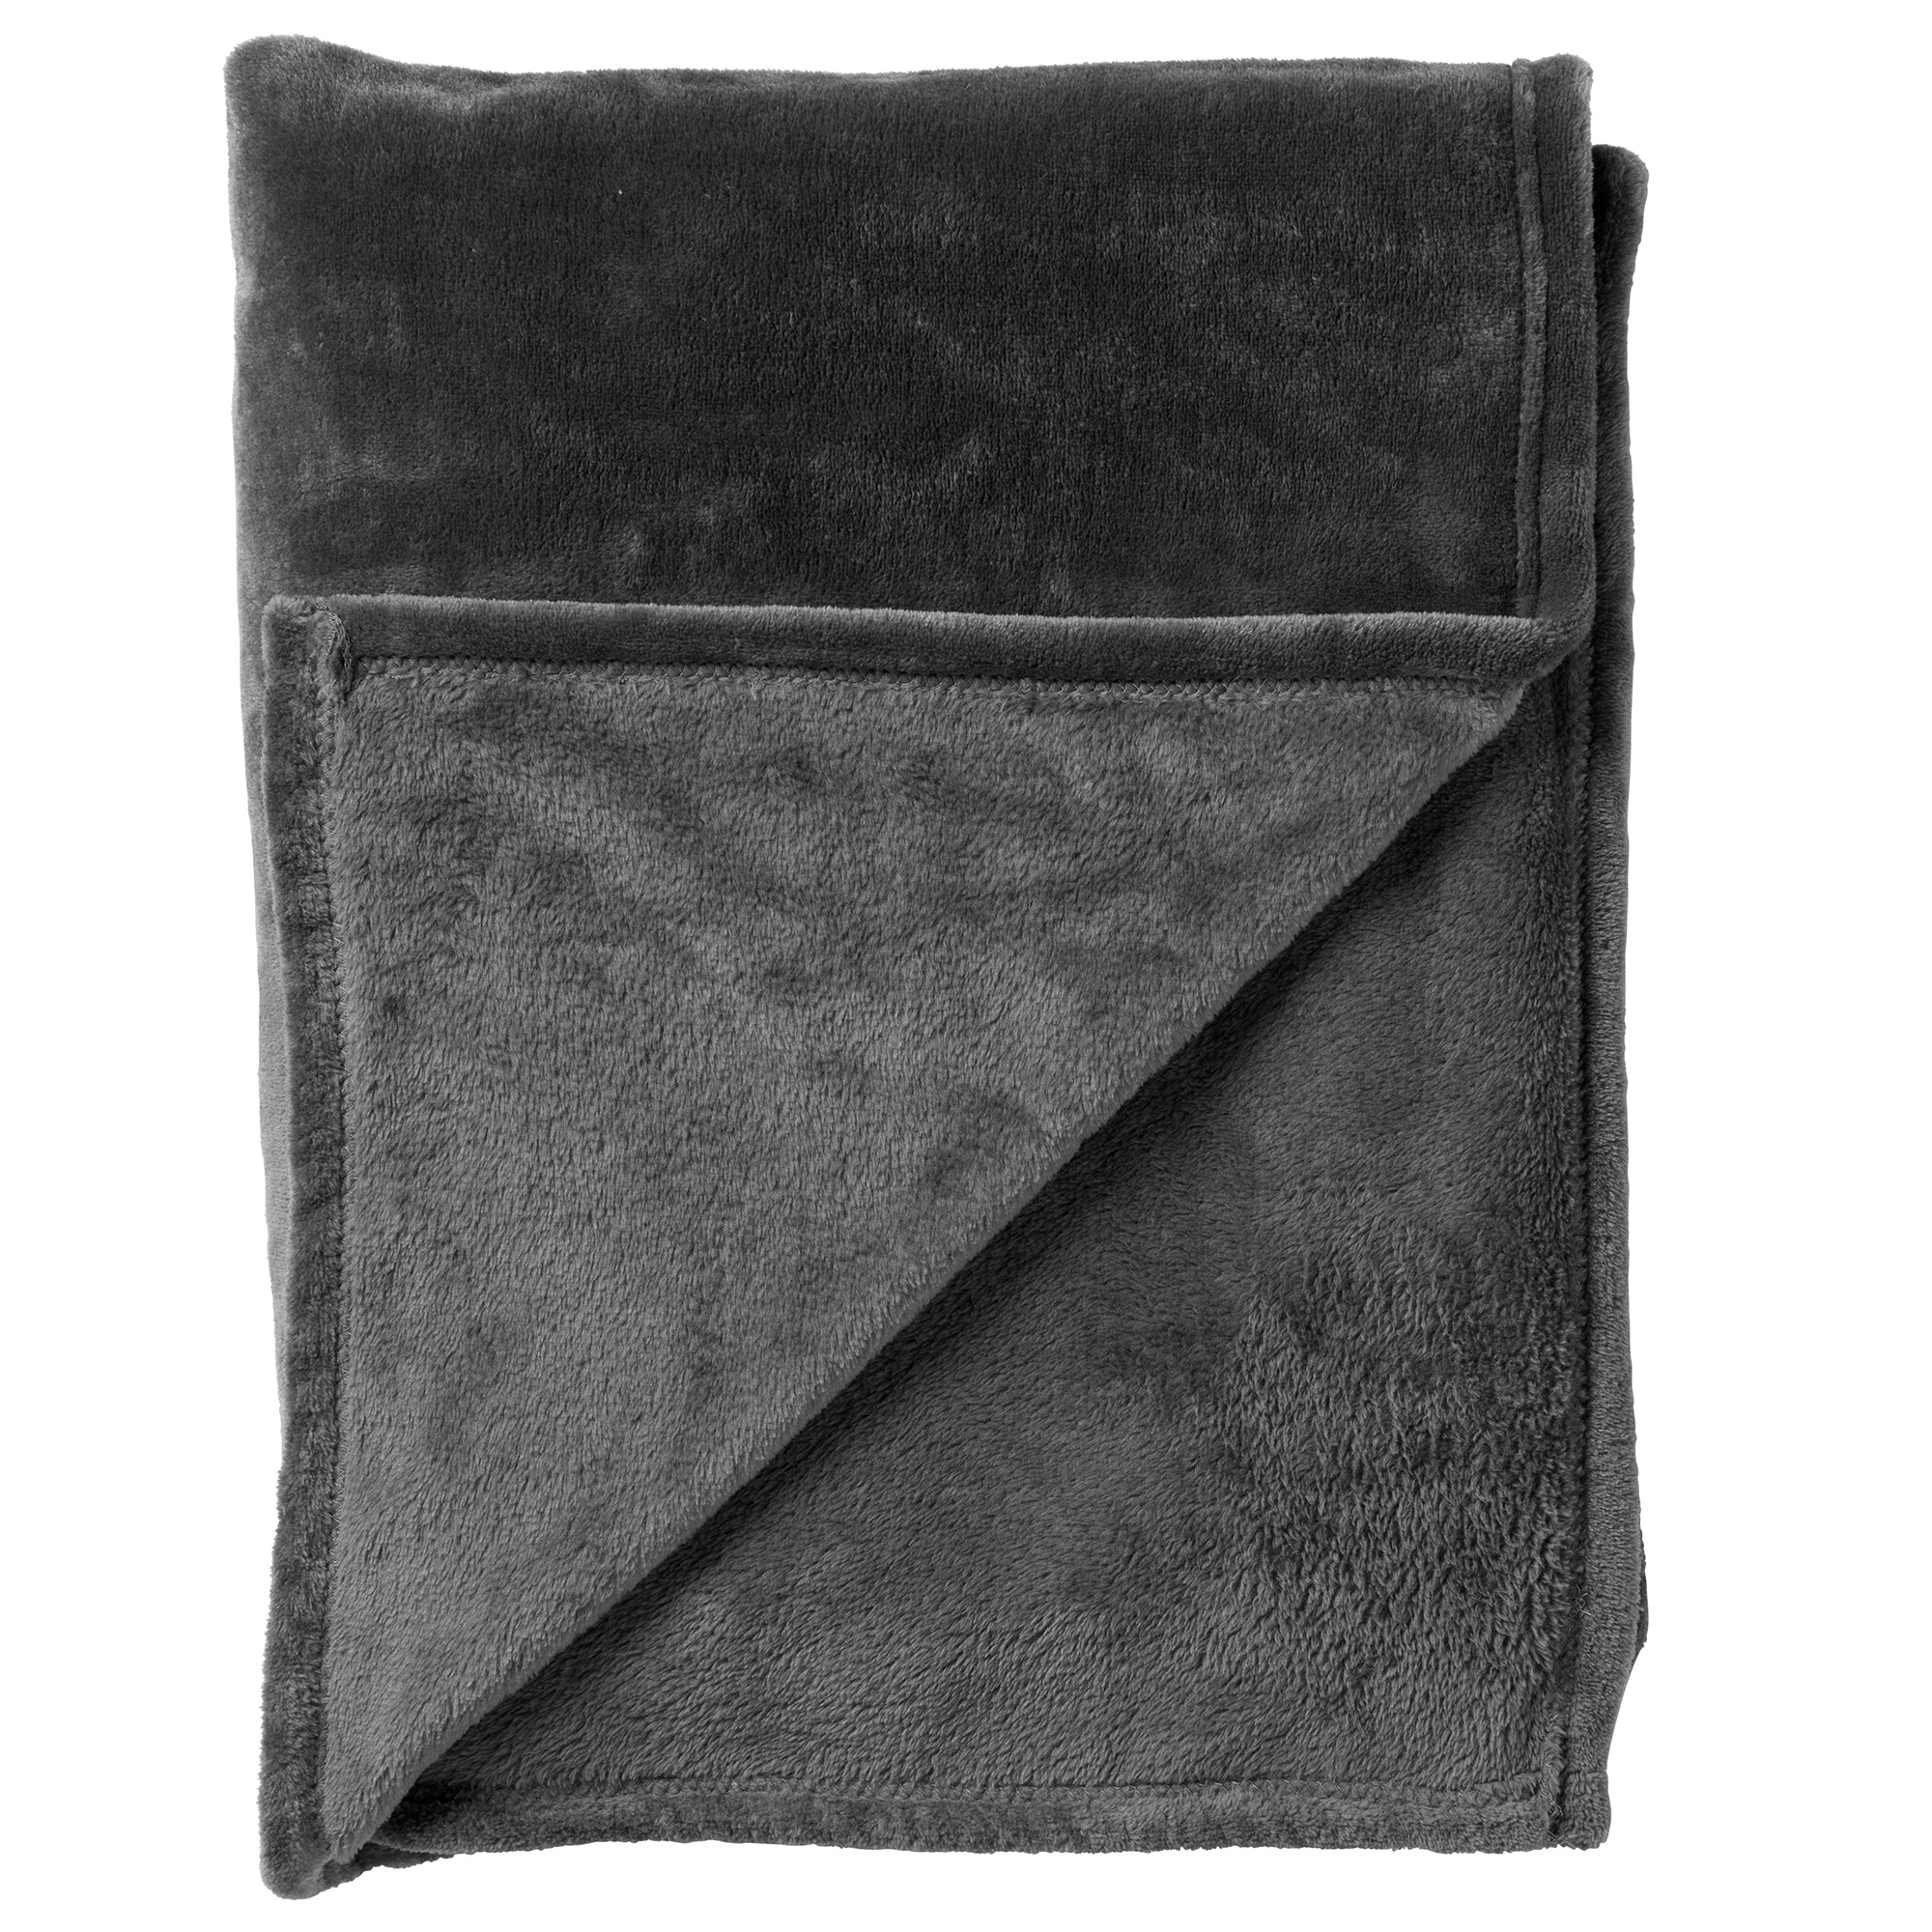 BILLY - Plaid 150x200 cm - flannel fleece - superzacht - Charcoal Gray - antraciet